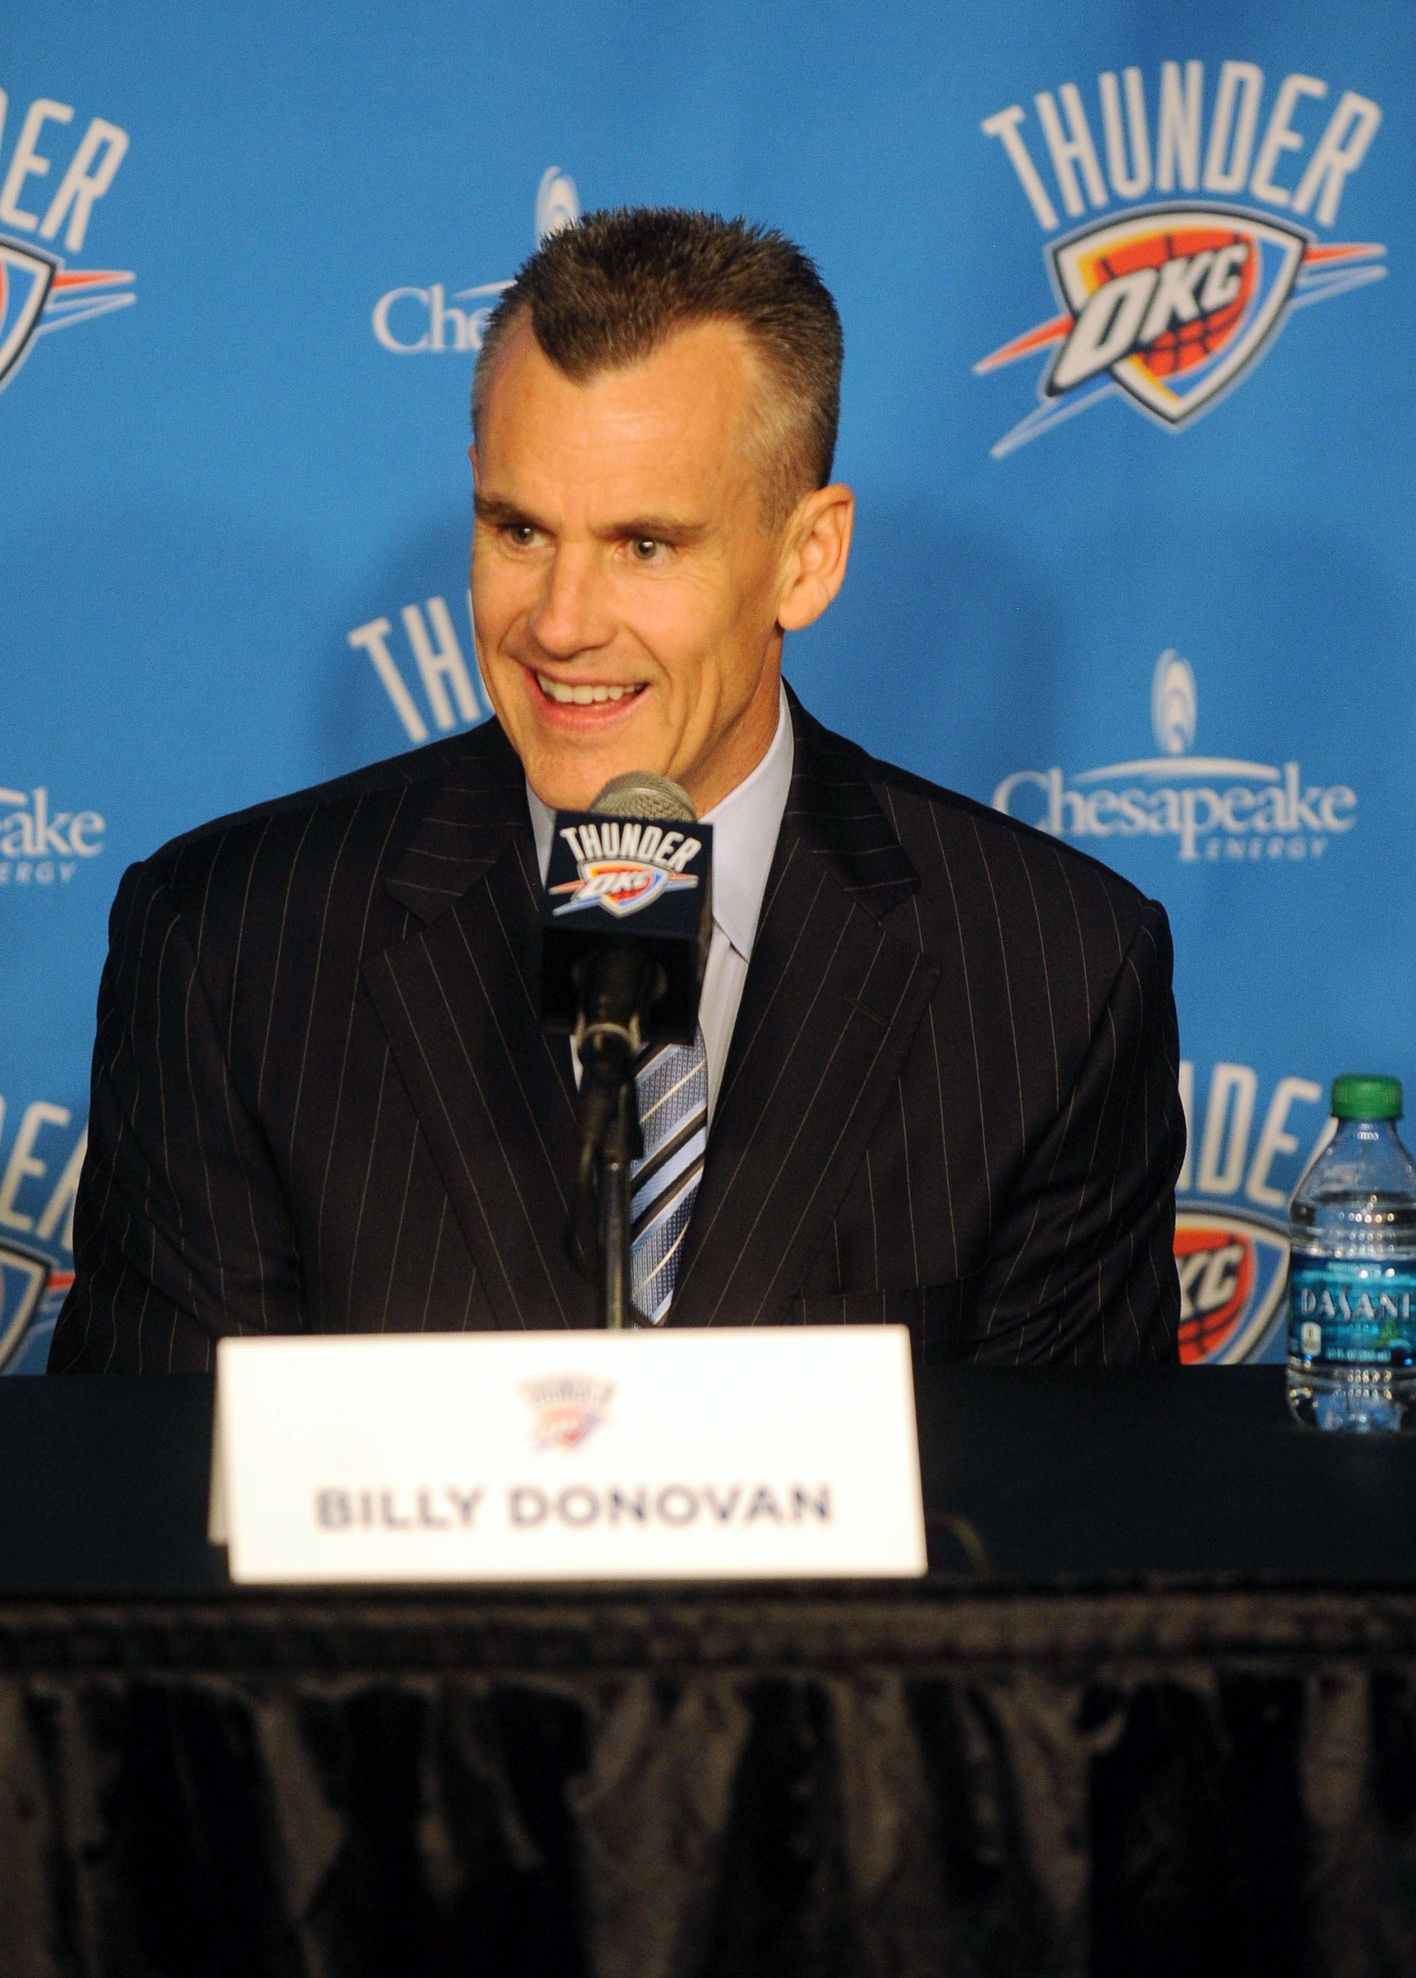 Thunder introduce new coach Billy Donovan 